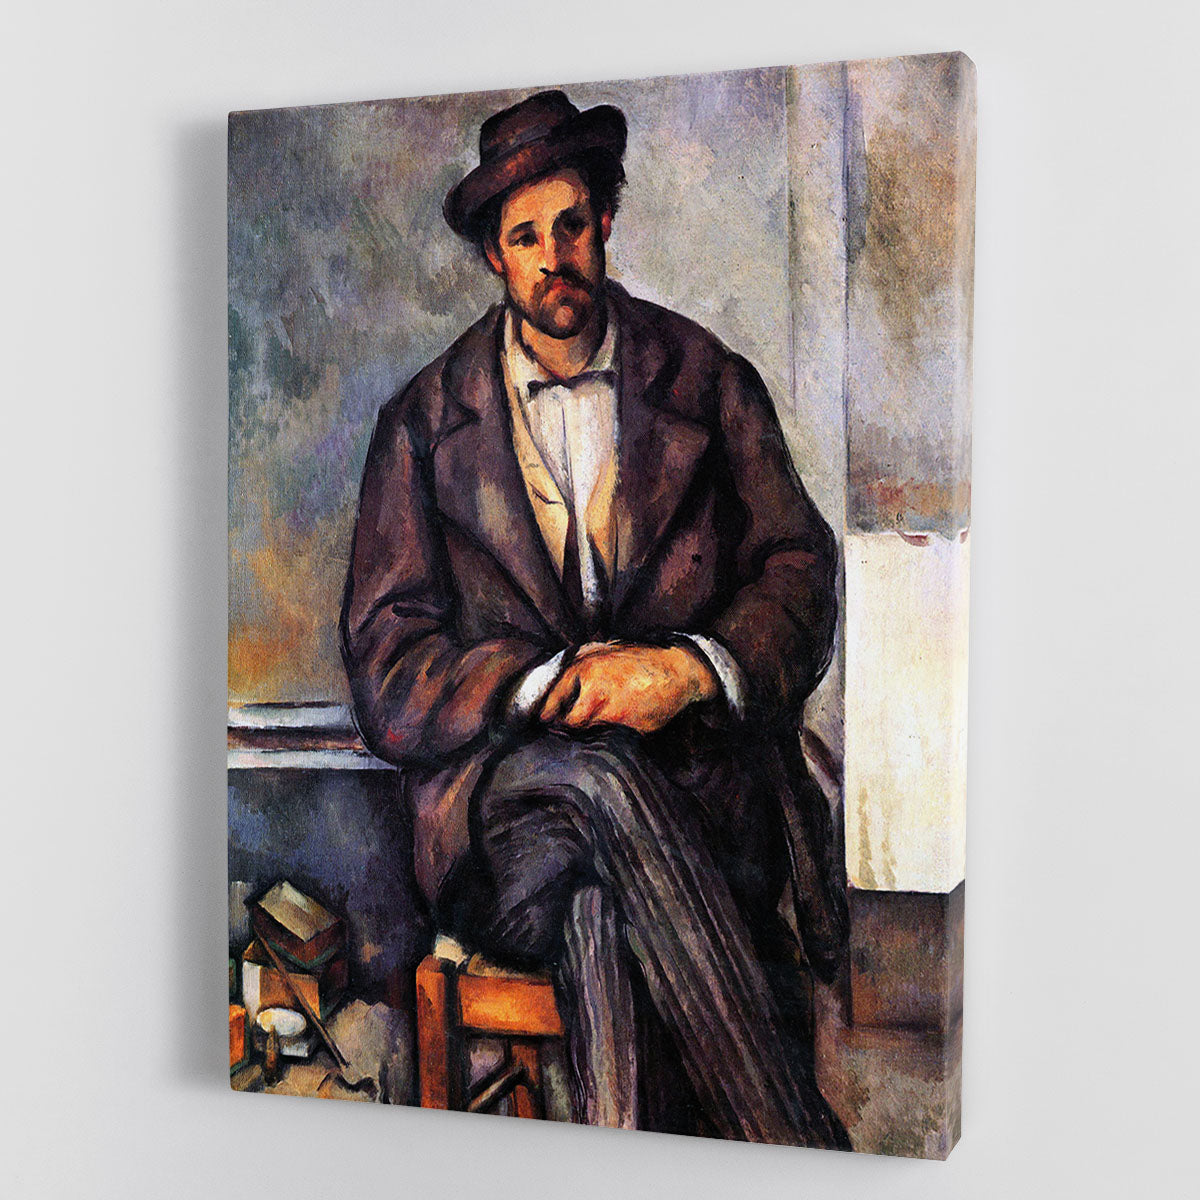 Sitting Farmer by Cezanne Canvas Print or Poster - Canvas Art Rocks - 1